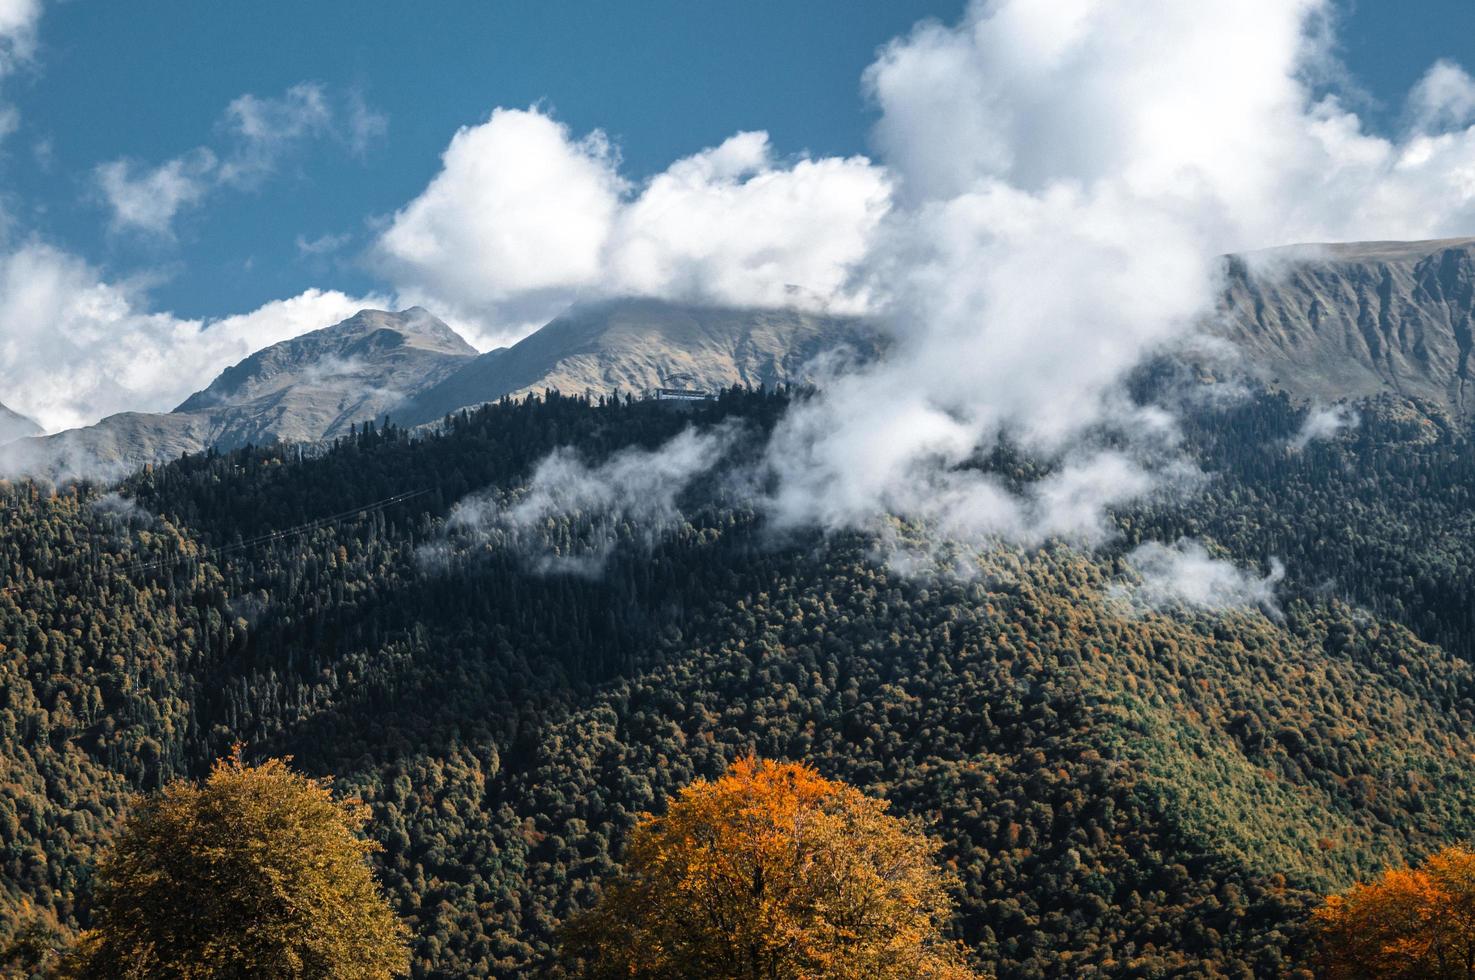 The Caucasus Mountains in Krasnaya Polyana, Russia photo